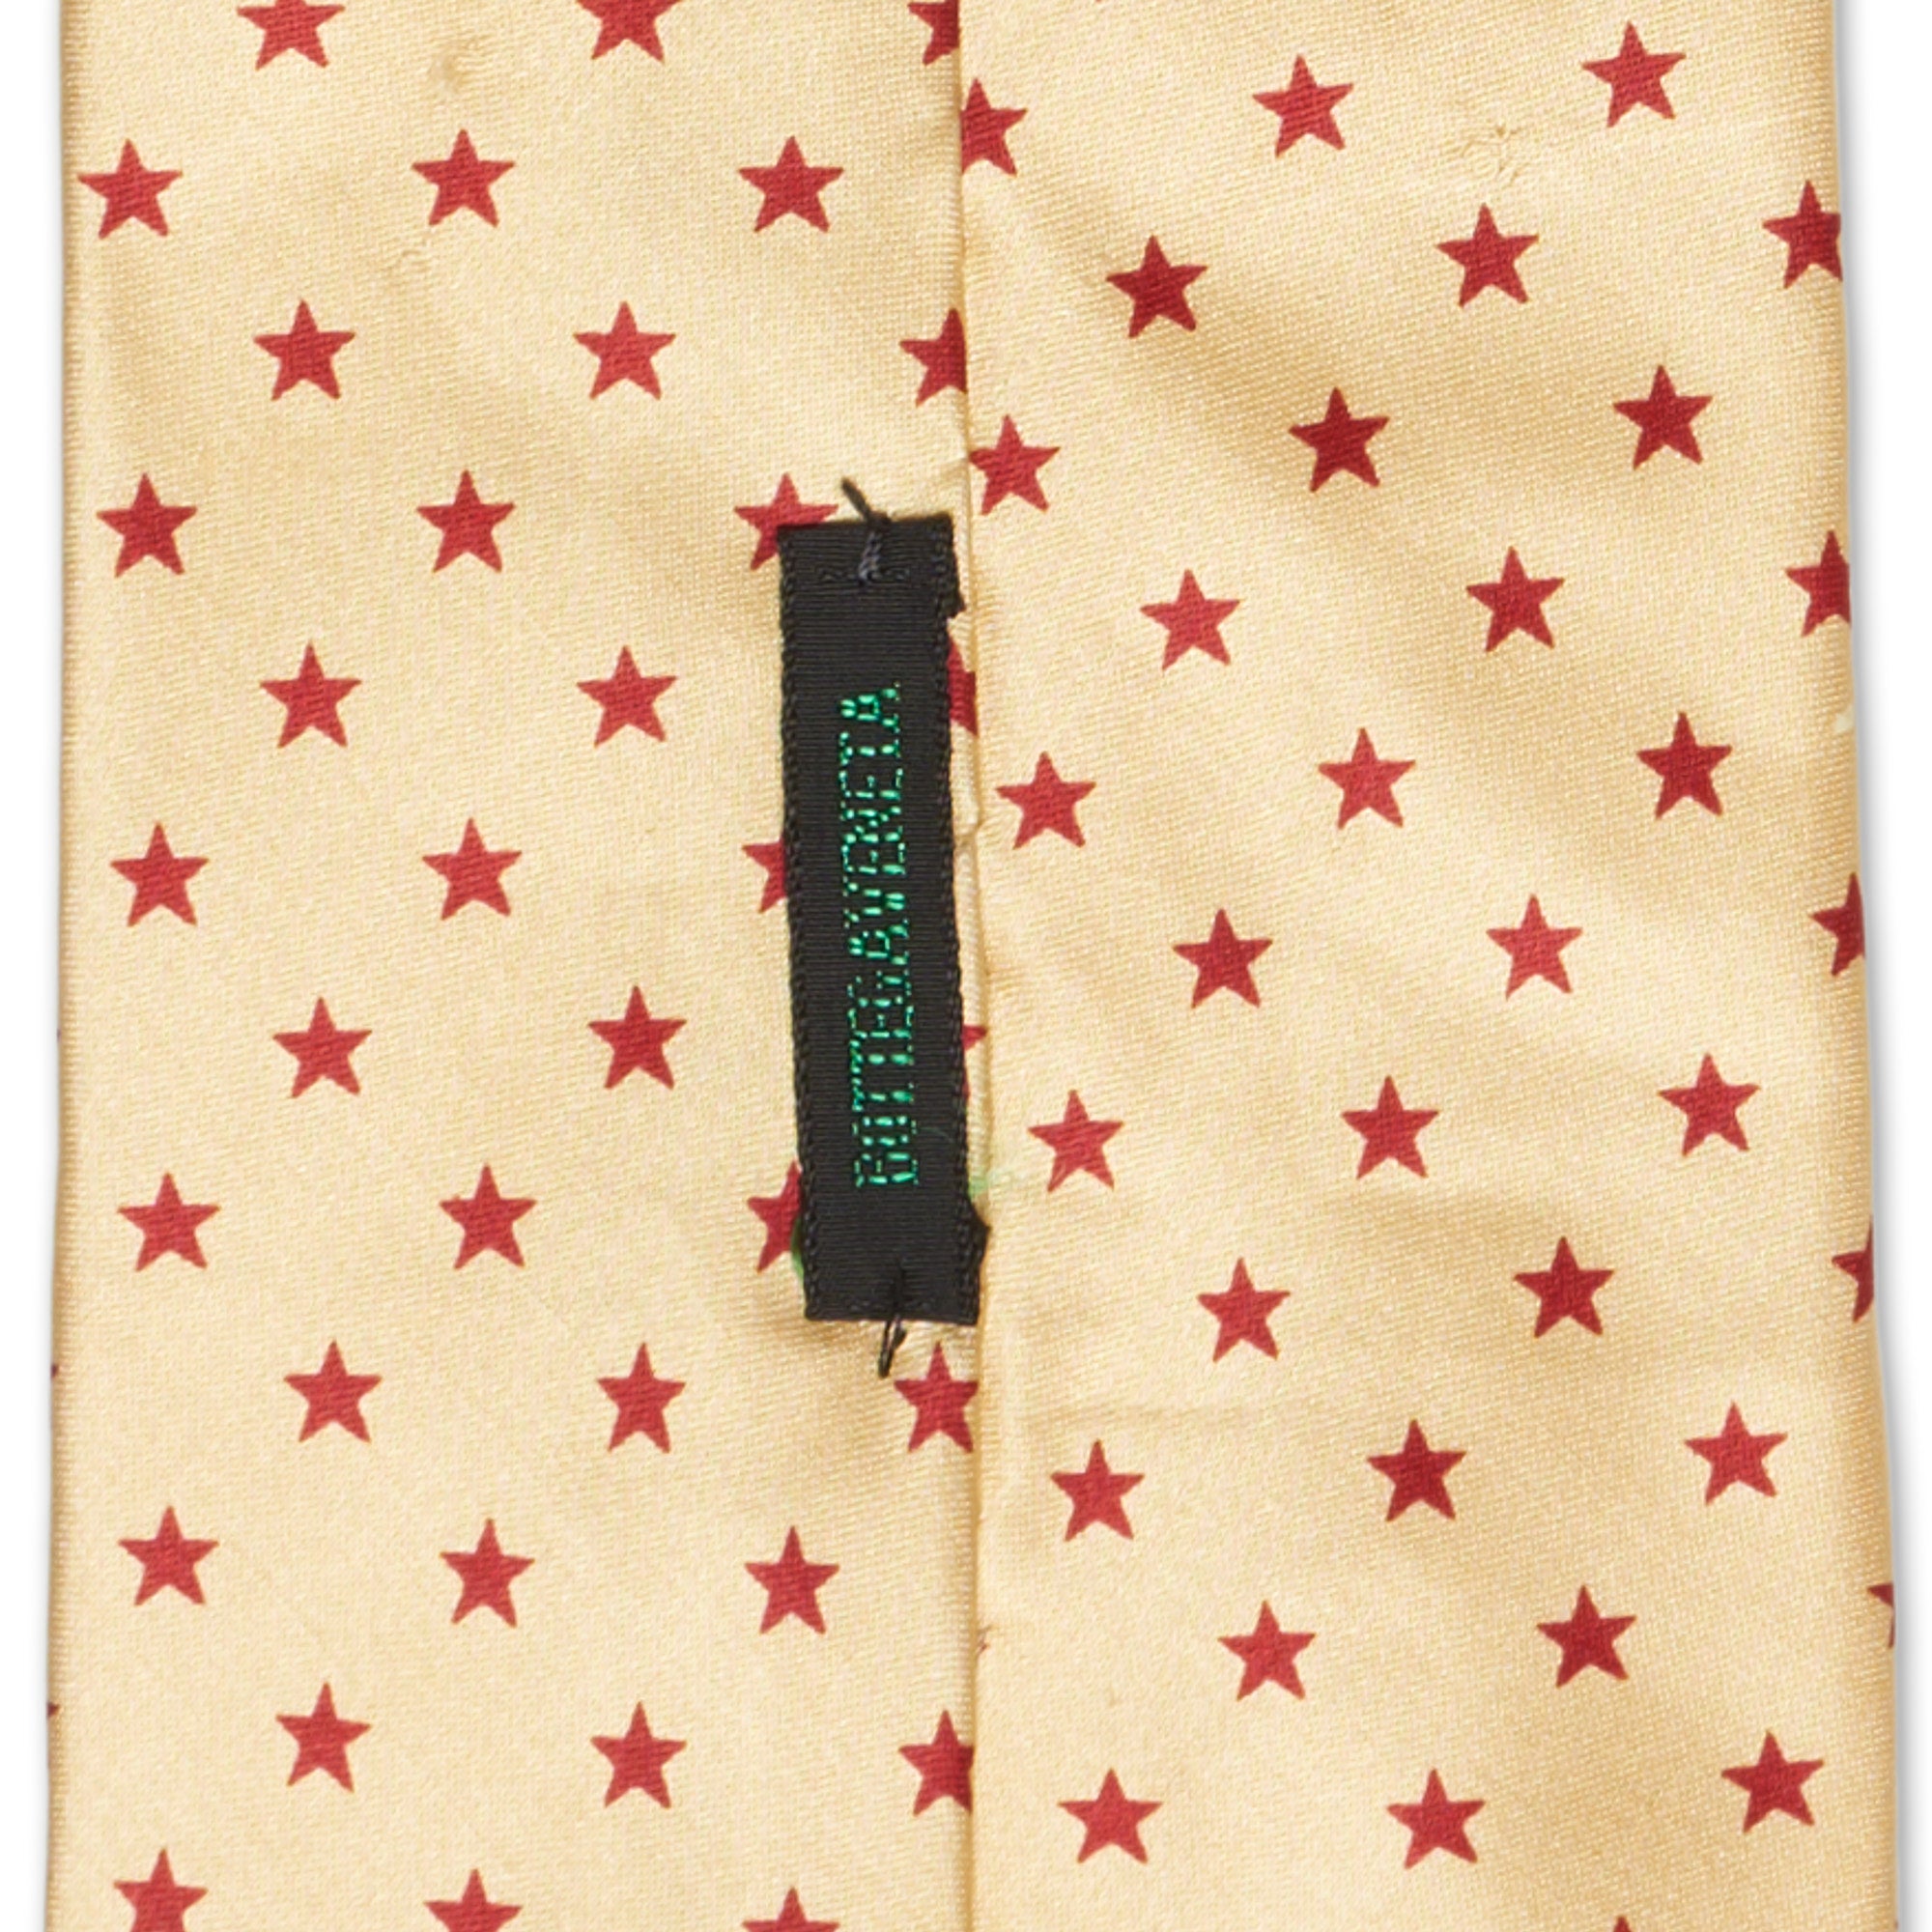 BOTTEGA VENETA Handmade Gold-Red Star Design Silk Tie